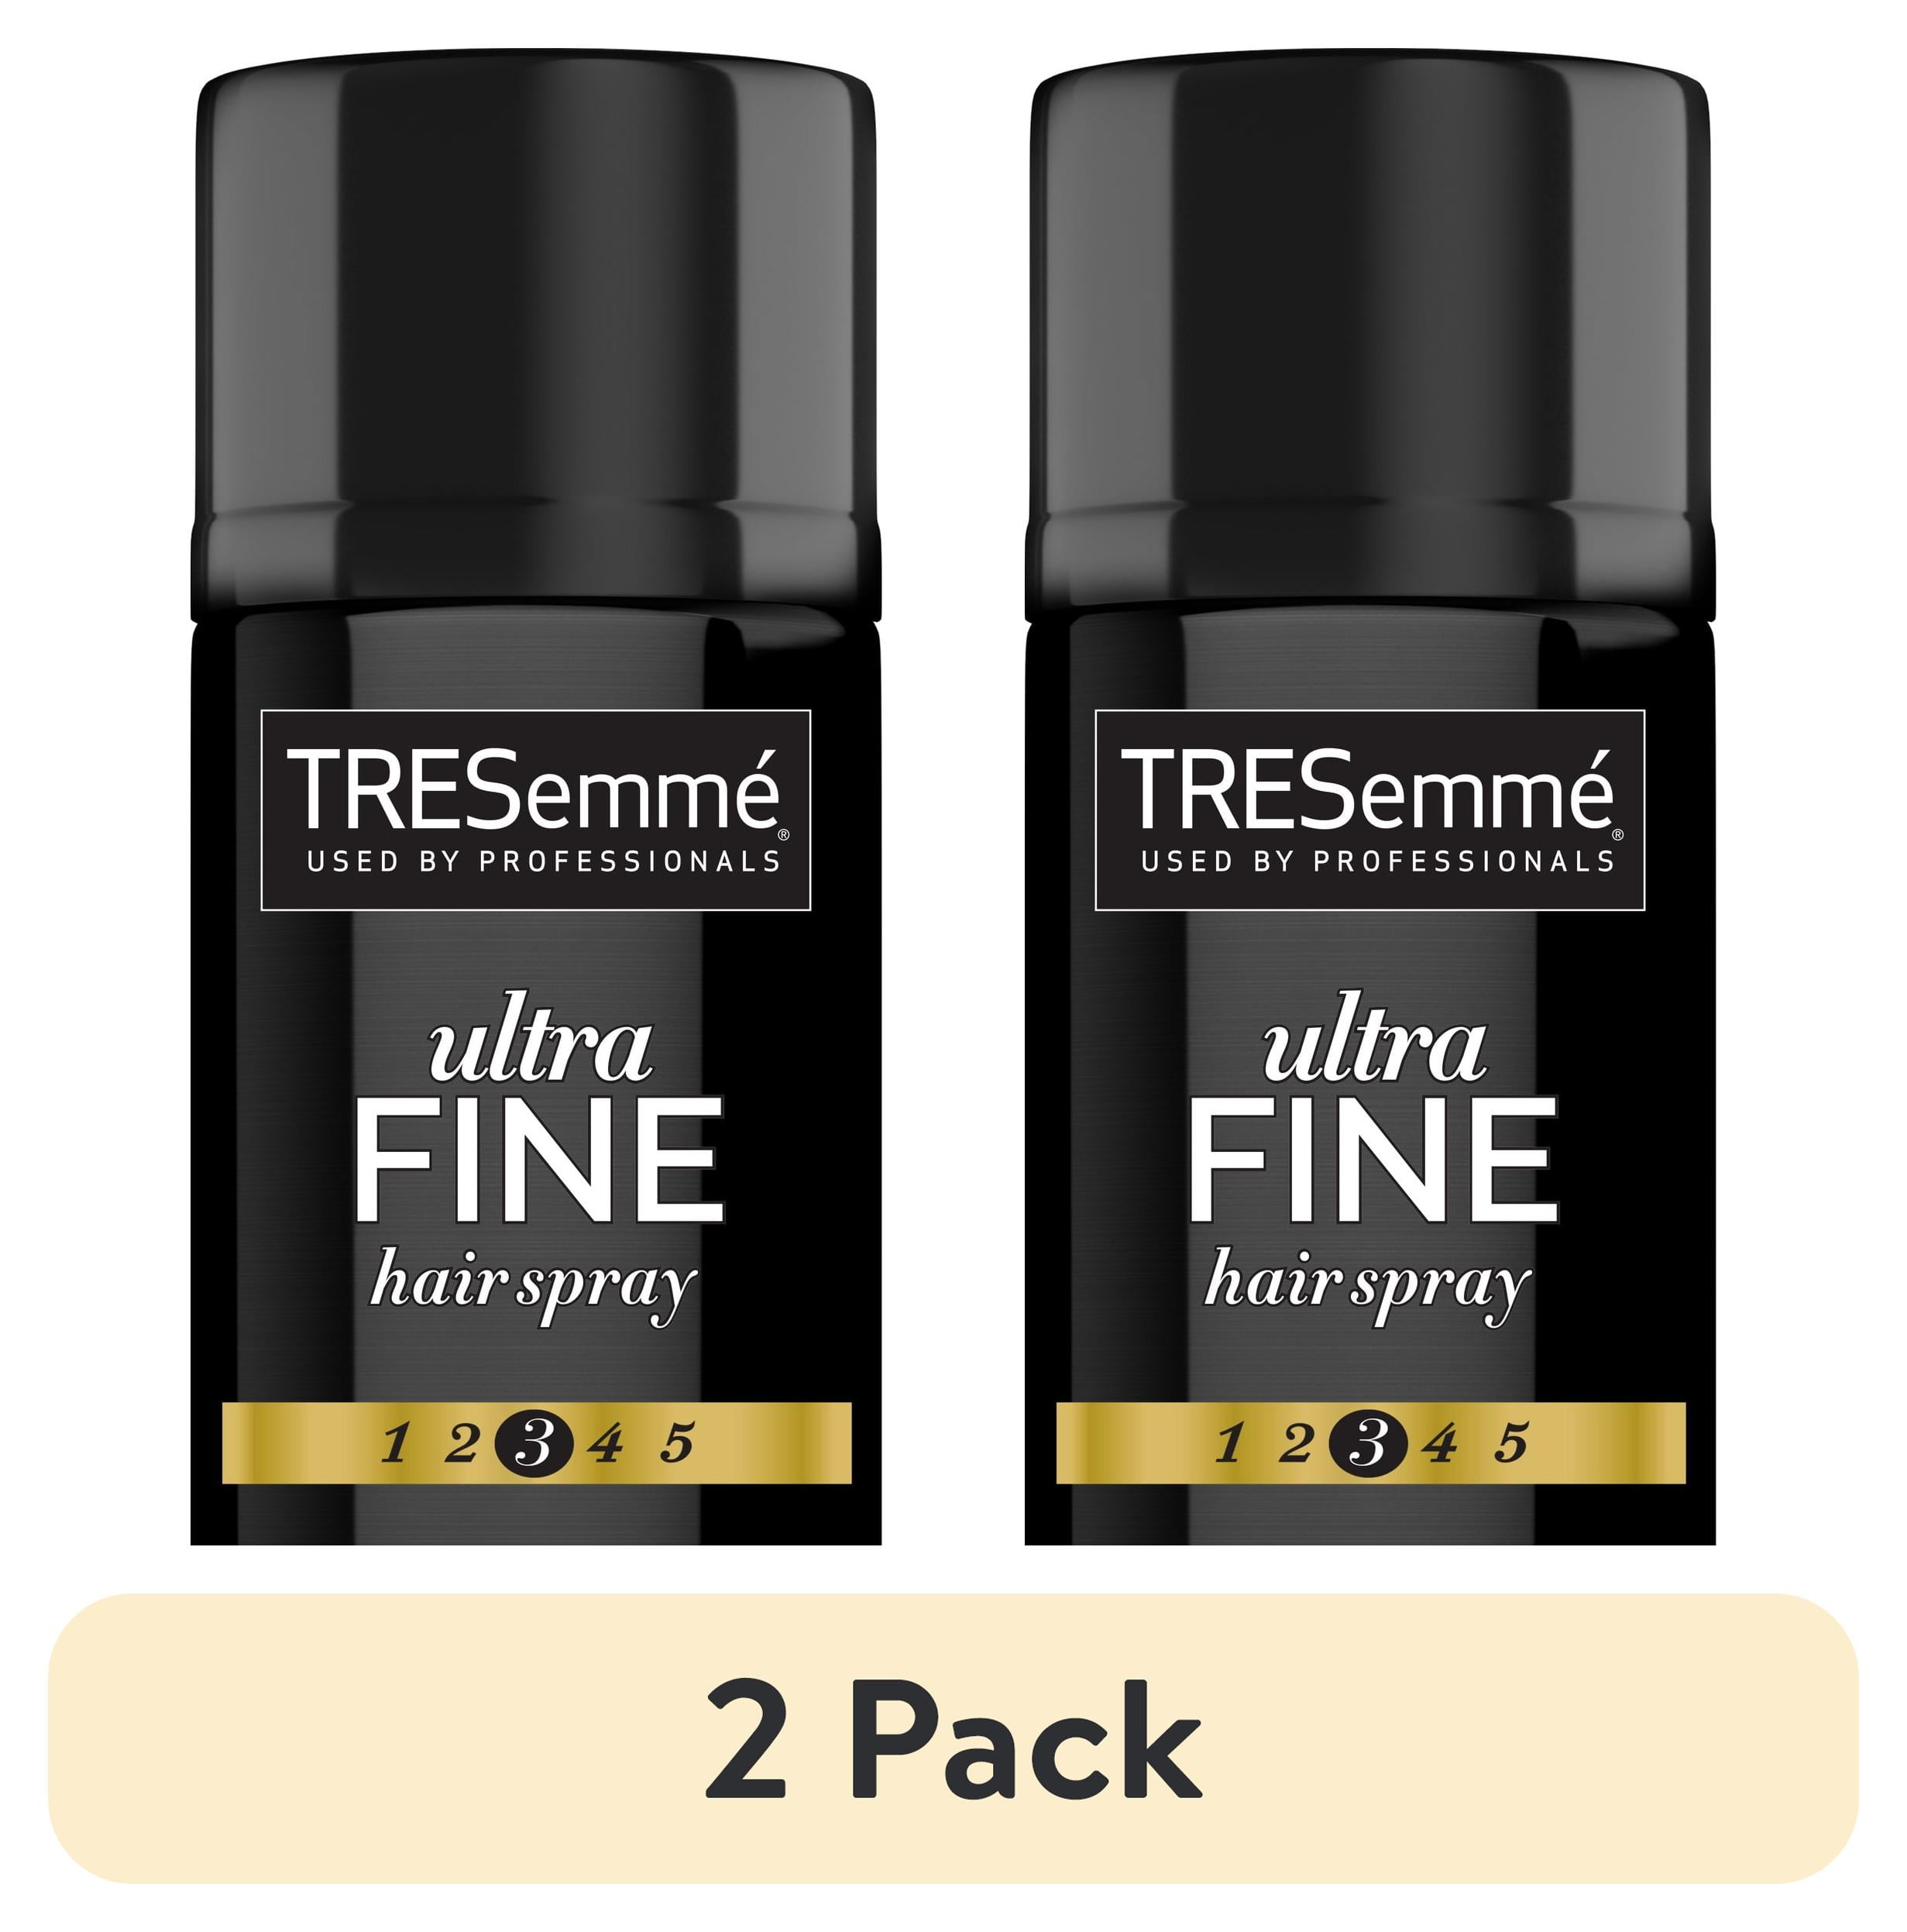 TRESemmé Hair Spray Extra Firm Control Extra Hold 11 Oz Can New FLASH SALE!  22400005218